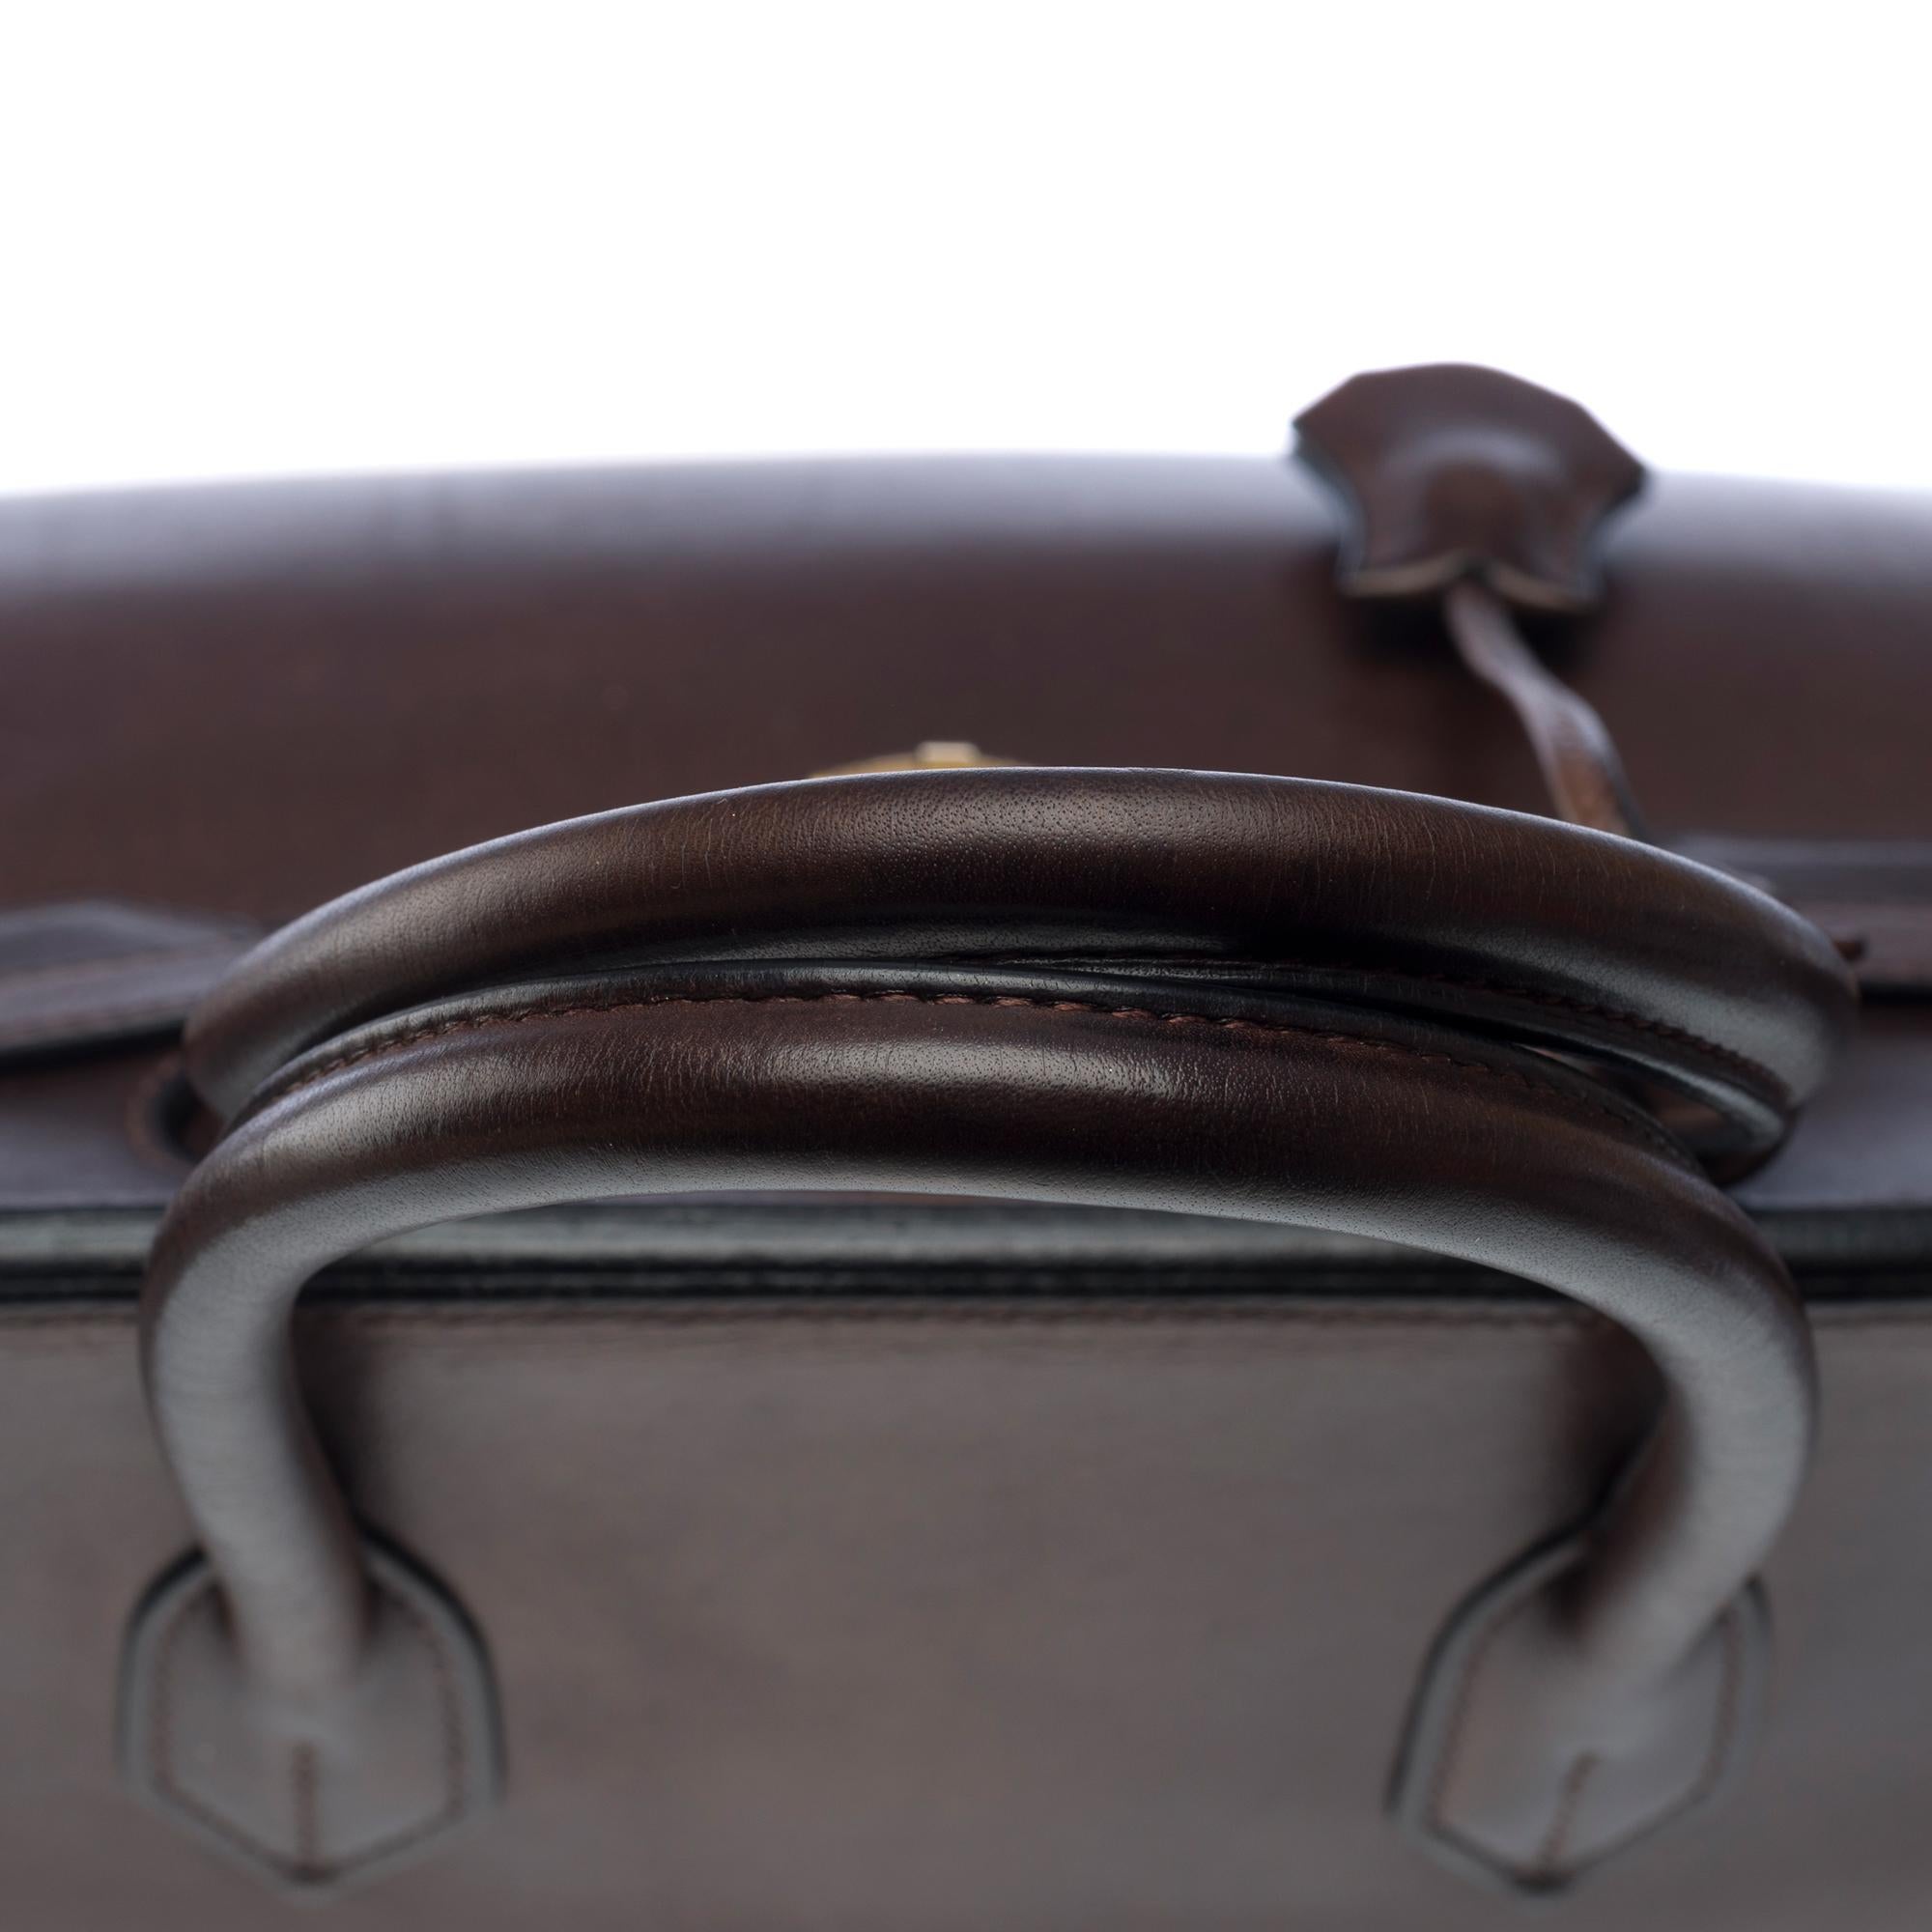 Rare & Exceptional Hermès Birkin 35 handbag in Ebony Brown Barenia leather, GHW For Sale 5